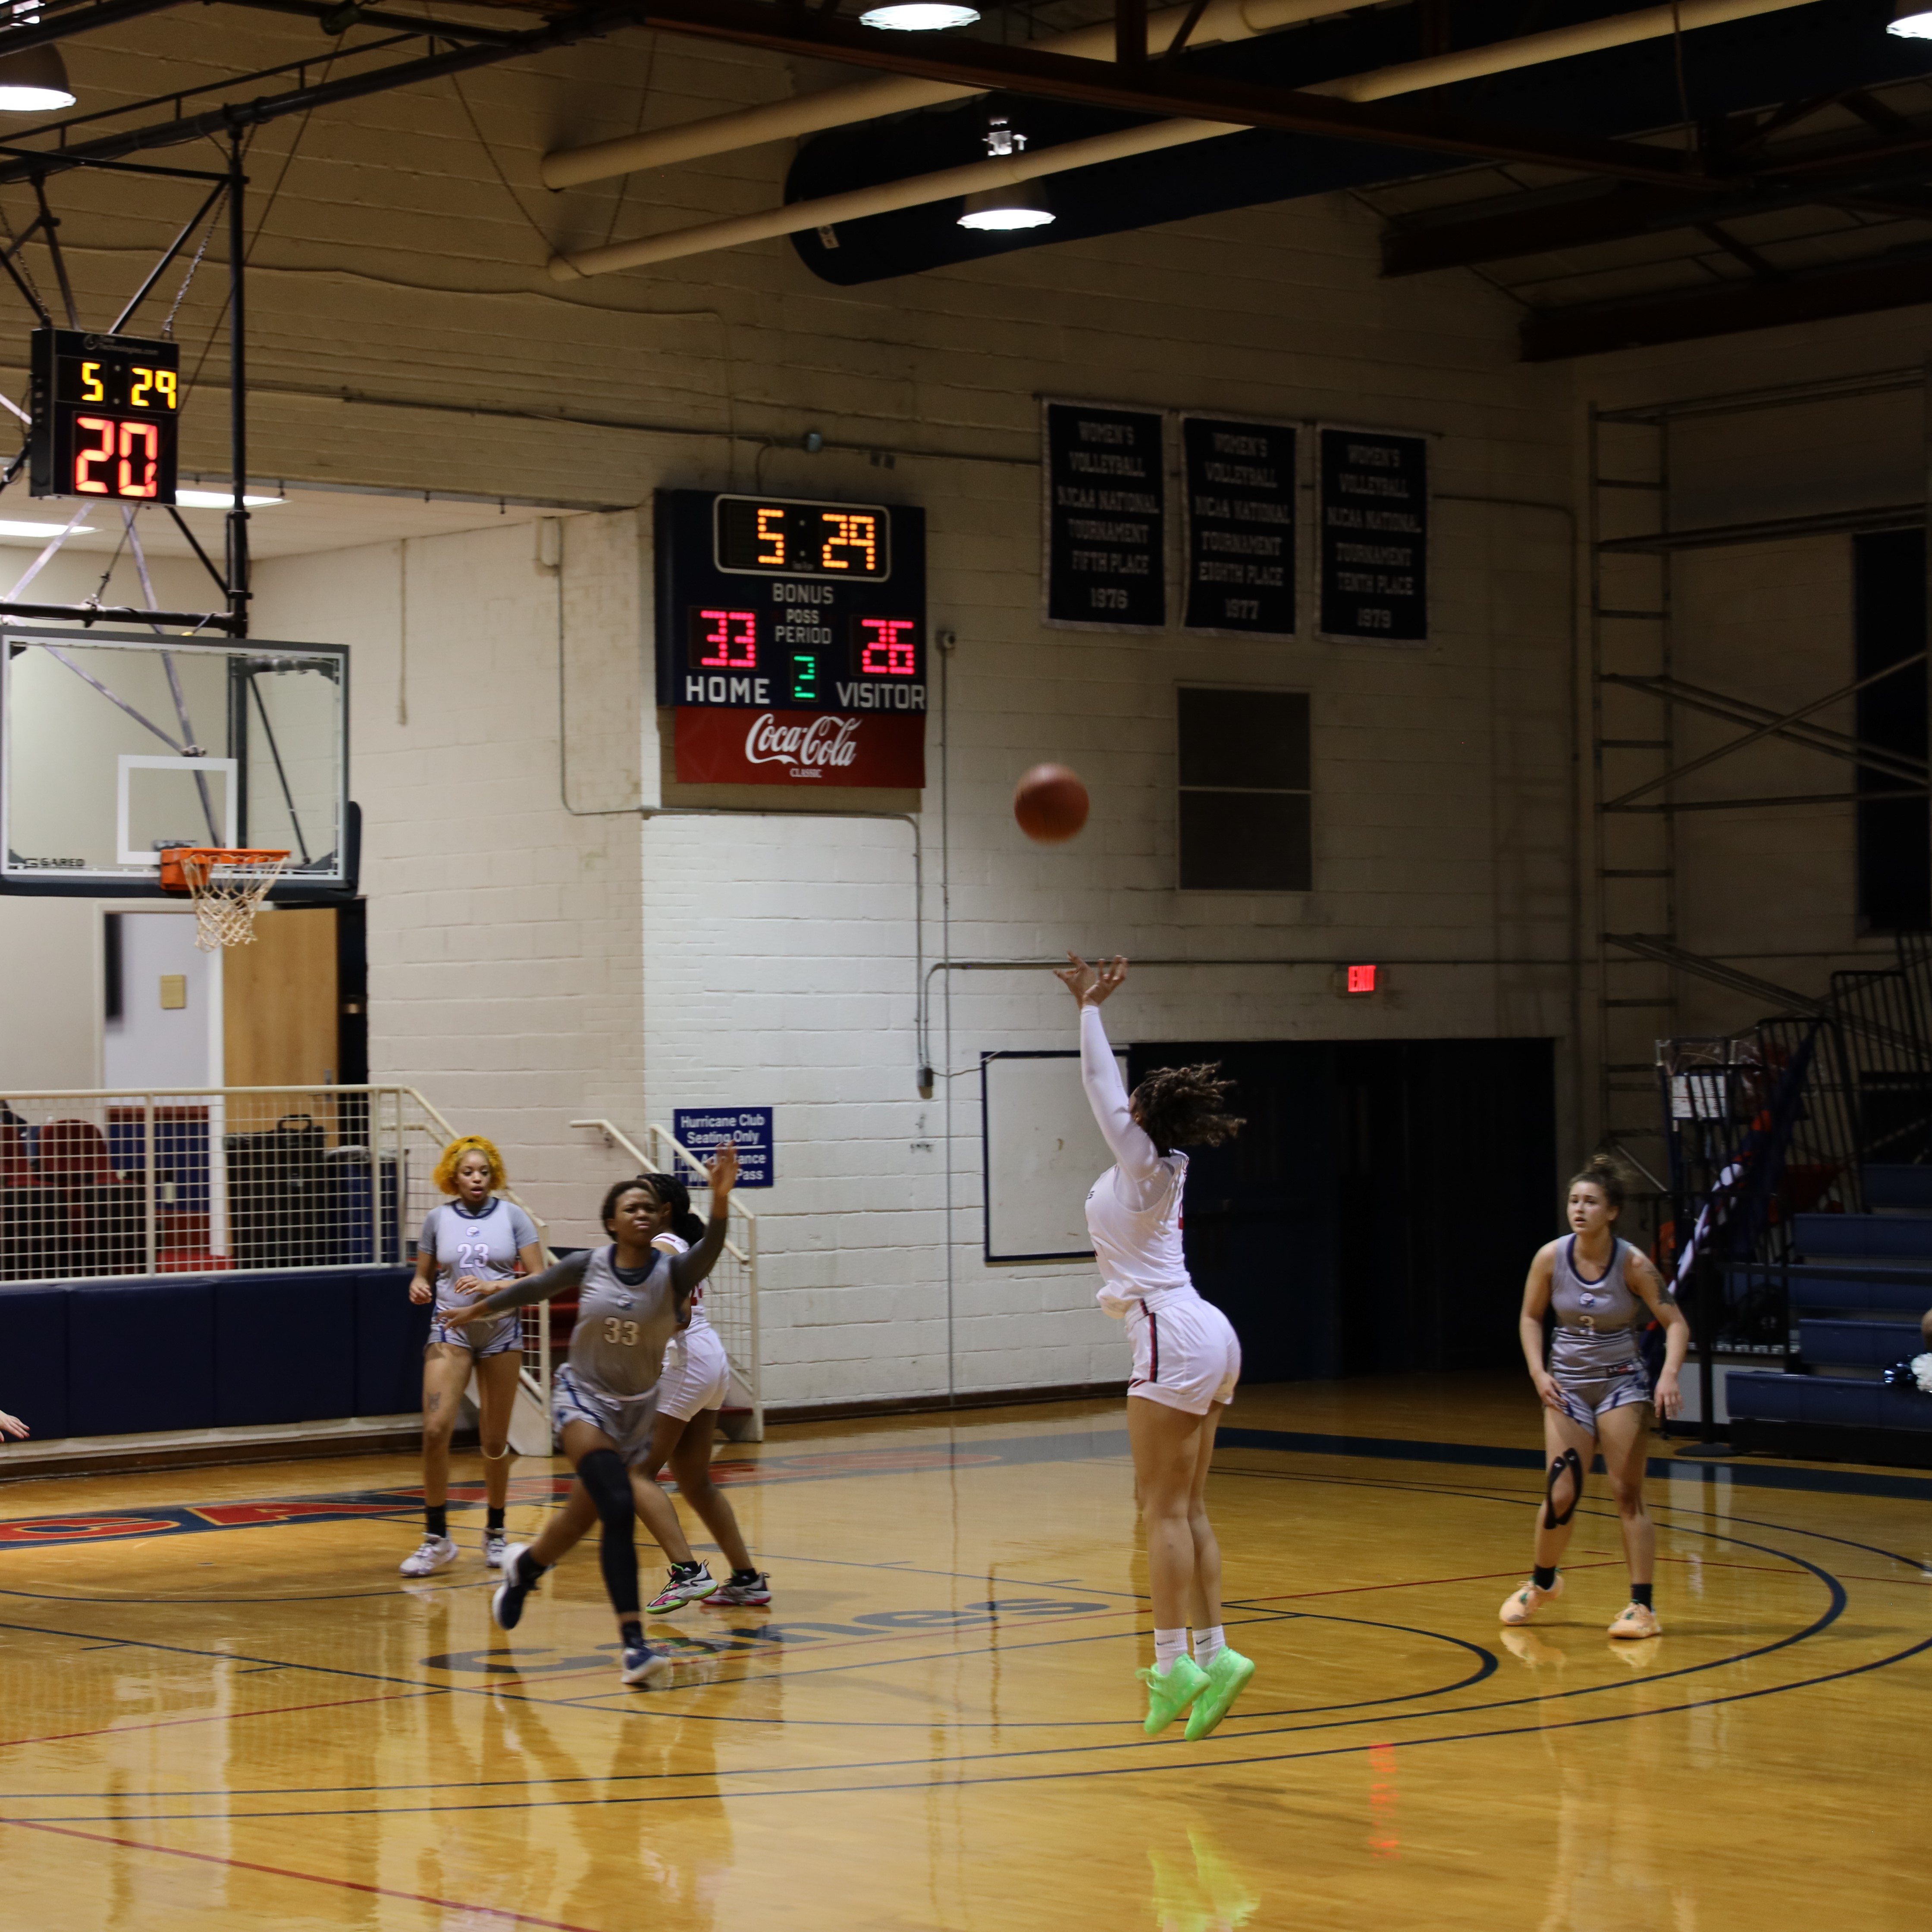 Louisburg College Women's Basketball team in action.